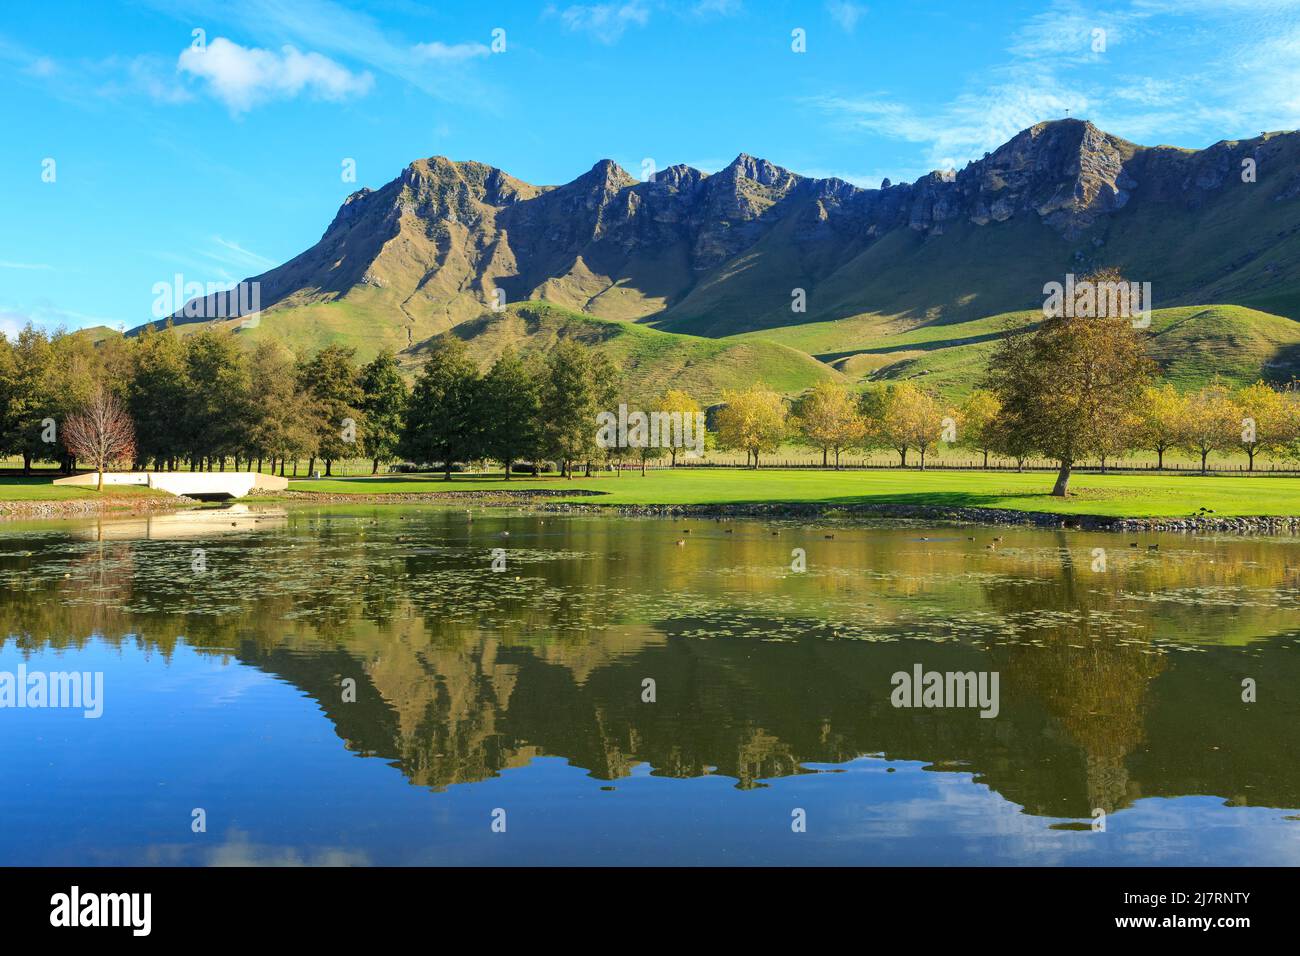 Te Mata Peak, a mountain in the Hawke's Bay region, New Zealand, reflected in a lake Stock Photo